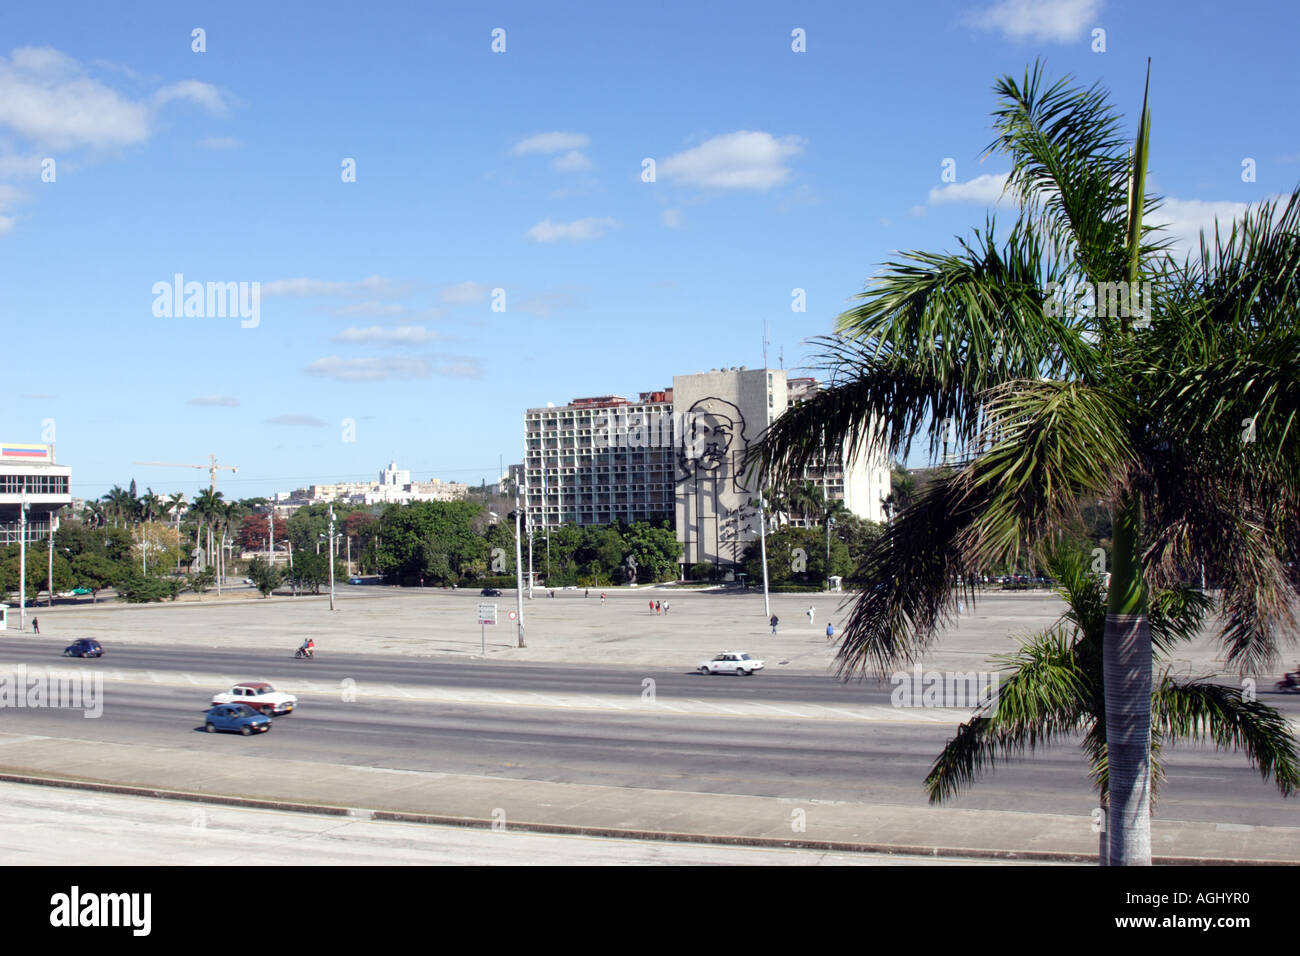 Che Guevara watches over Plaza de la Revolution, Havana, Cuba Stock Photo